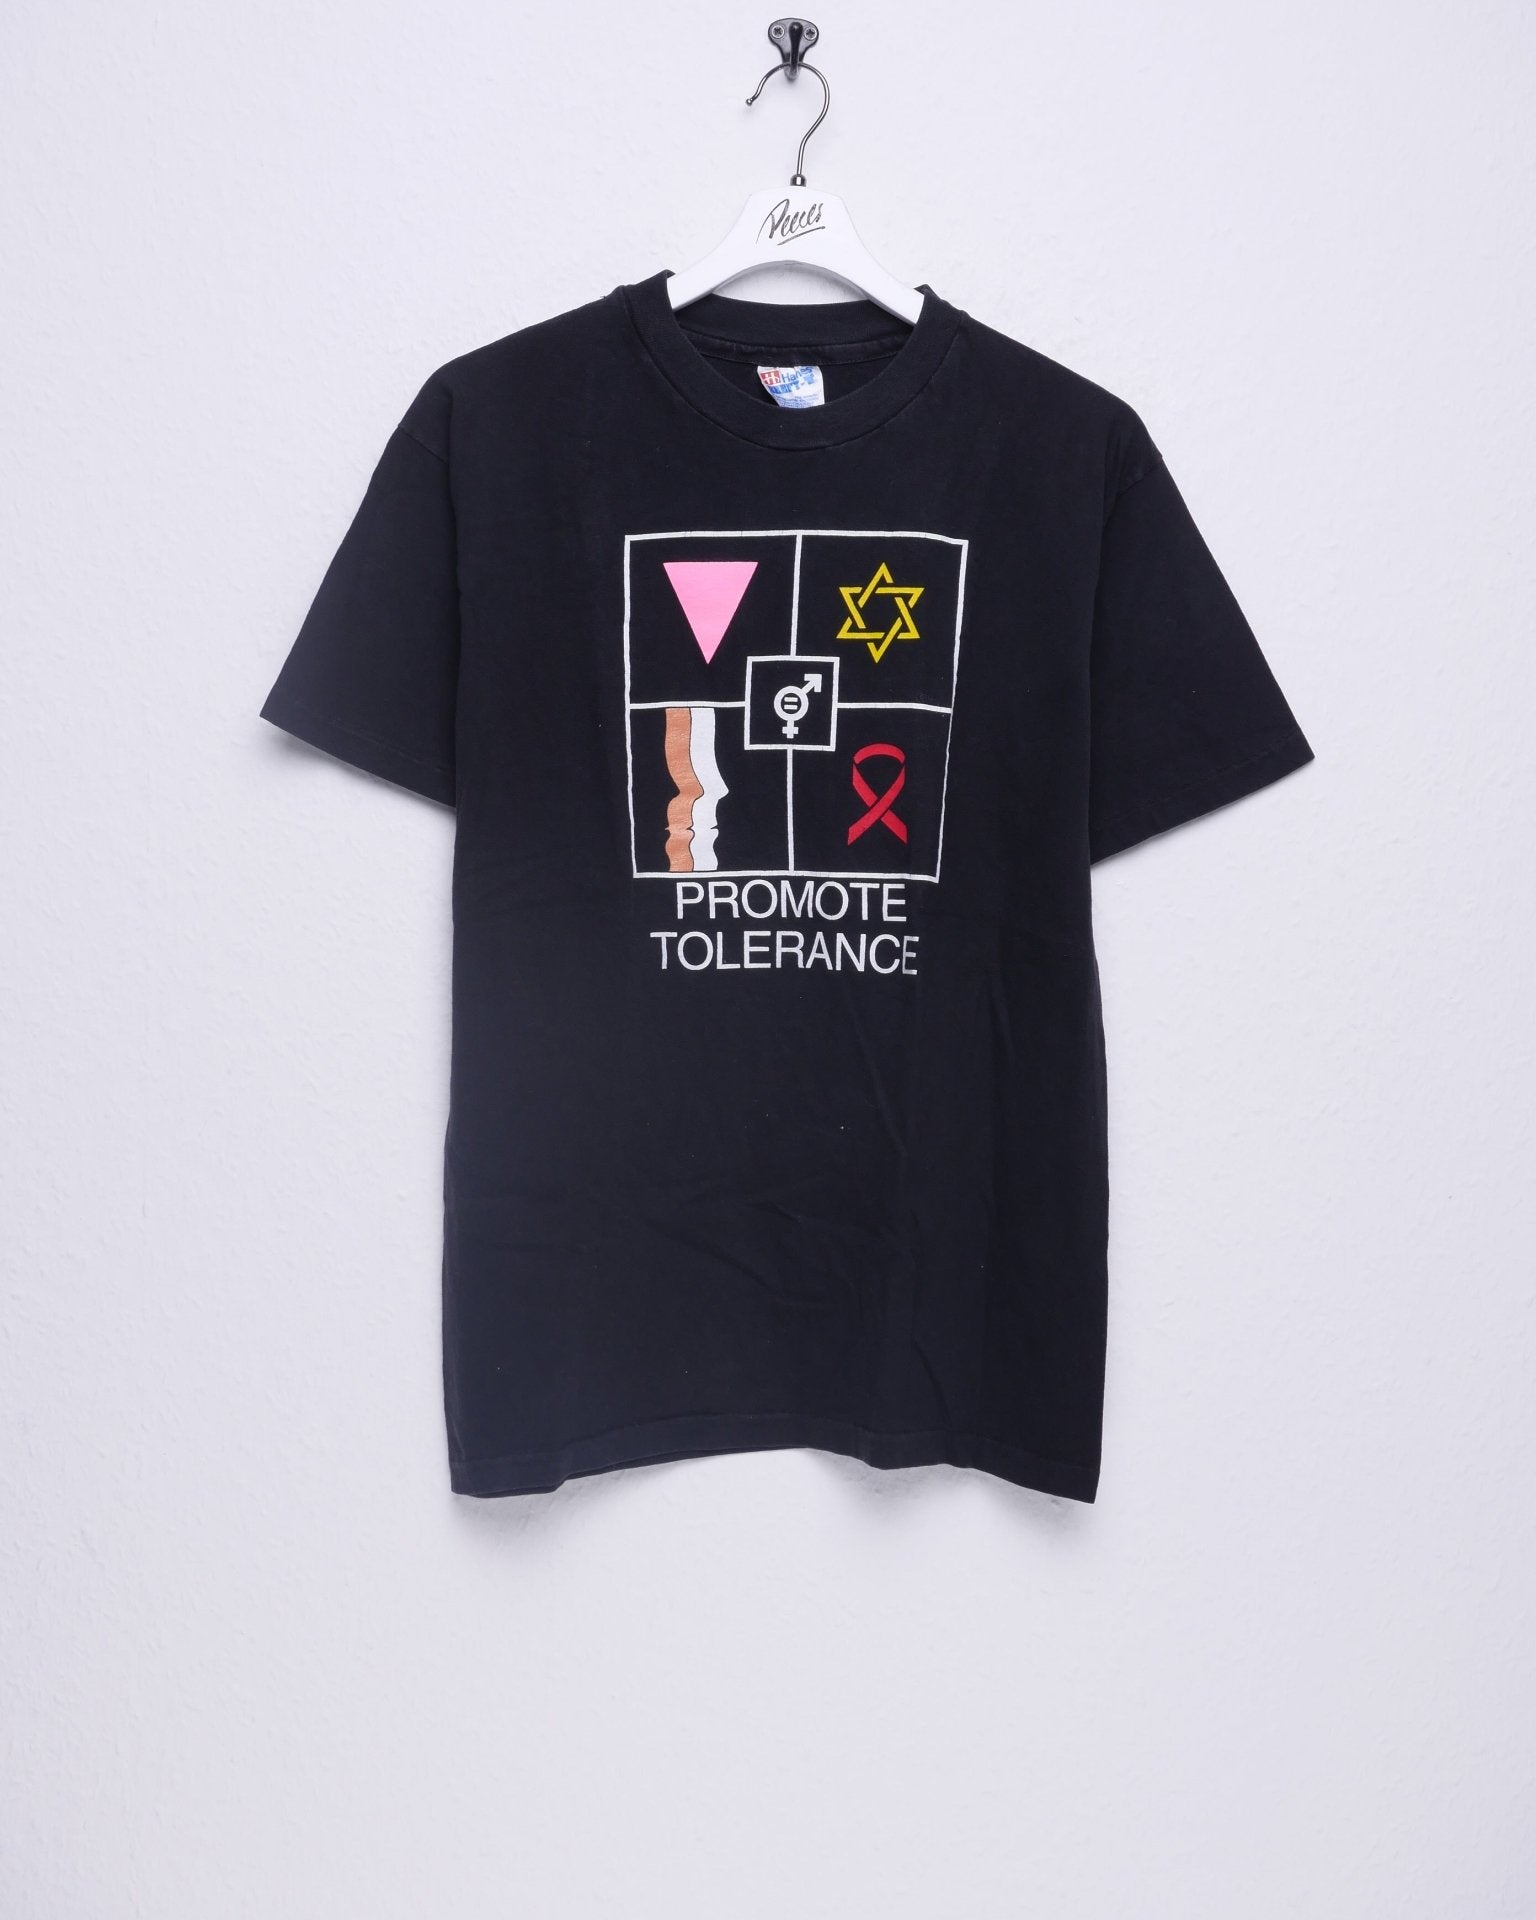 'Promote Tolerance' printed Graphic black Shirt - Peeces